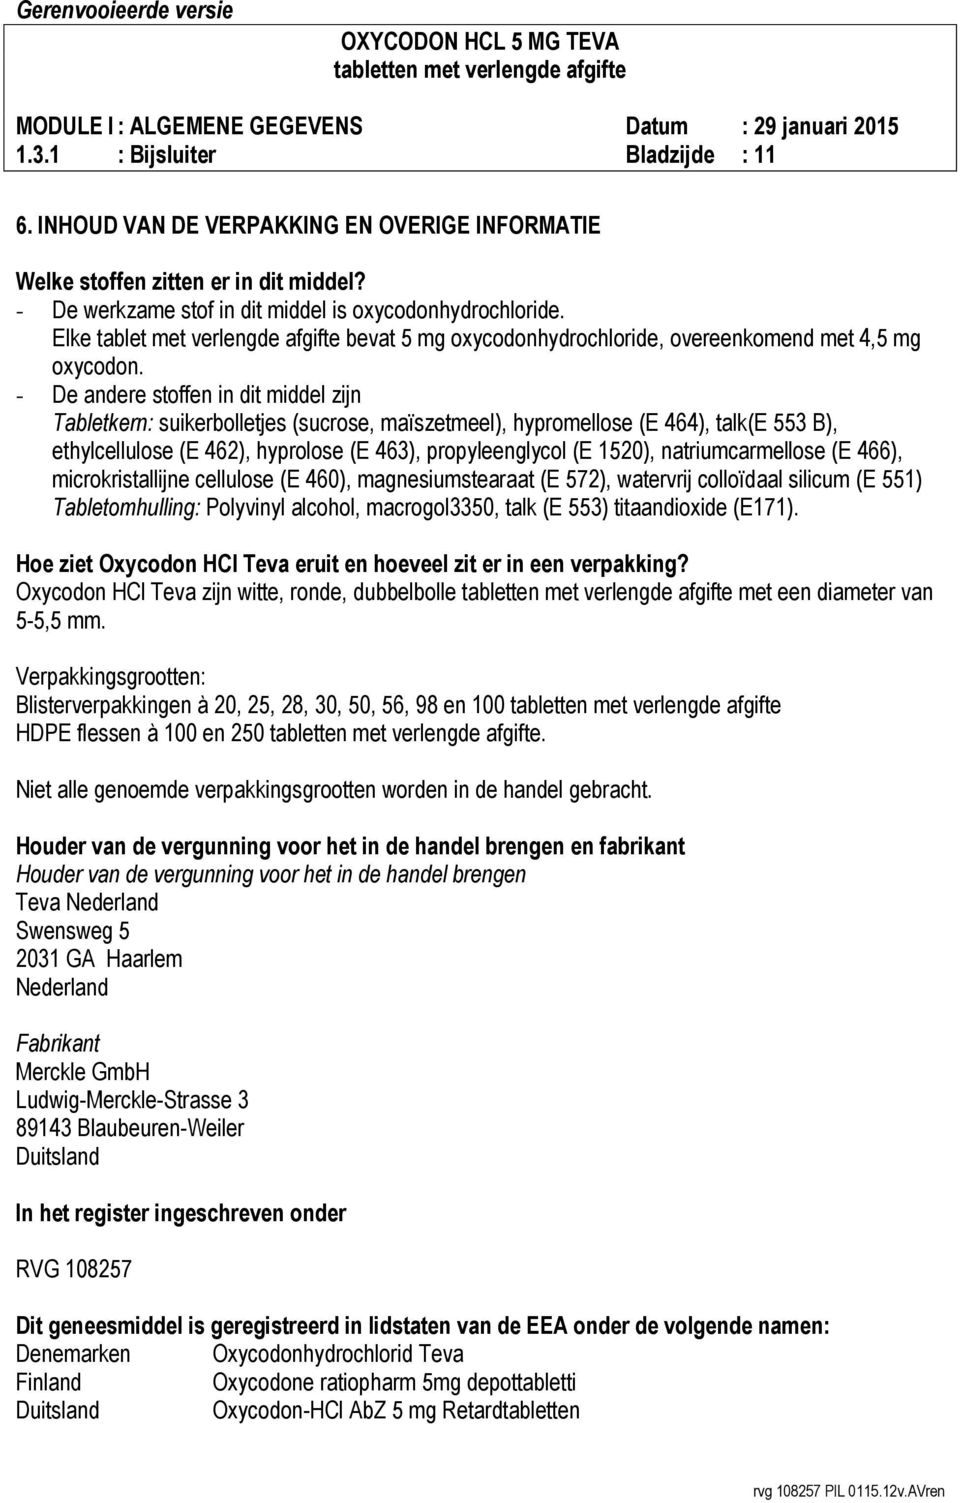 Oxycodon HCl 5 mg Teva, tabletten met verlengde afgifte  oxycodonhydrochloride - PDF Gratis download